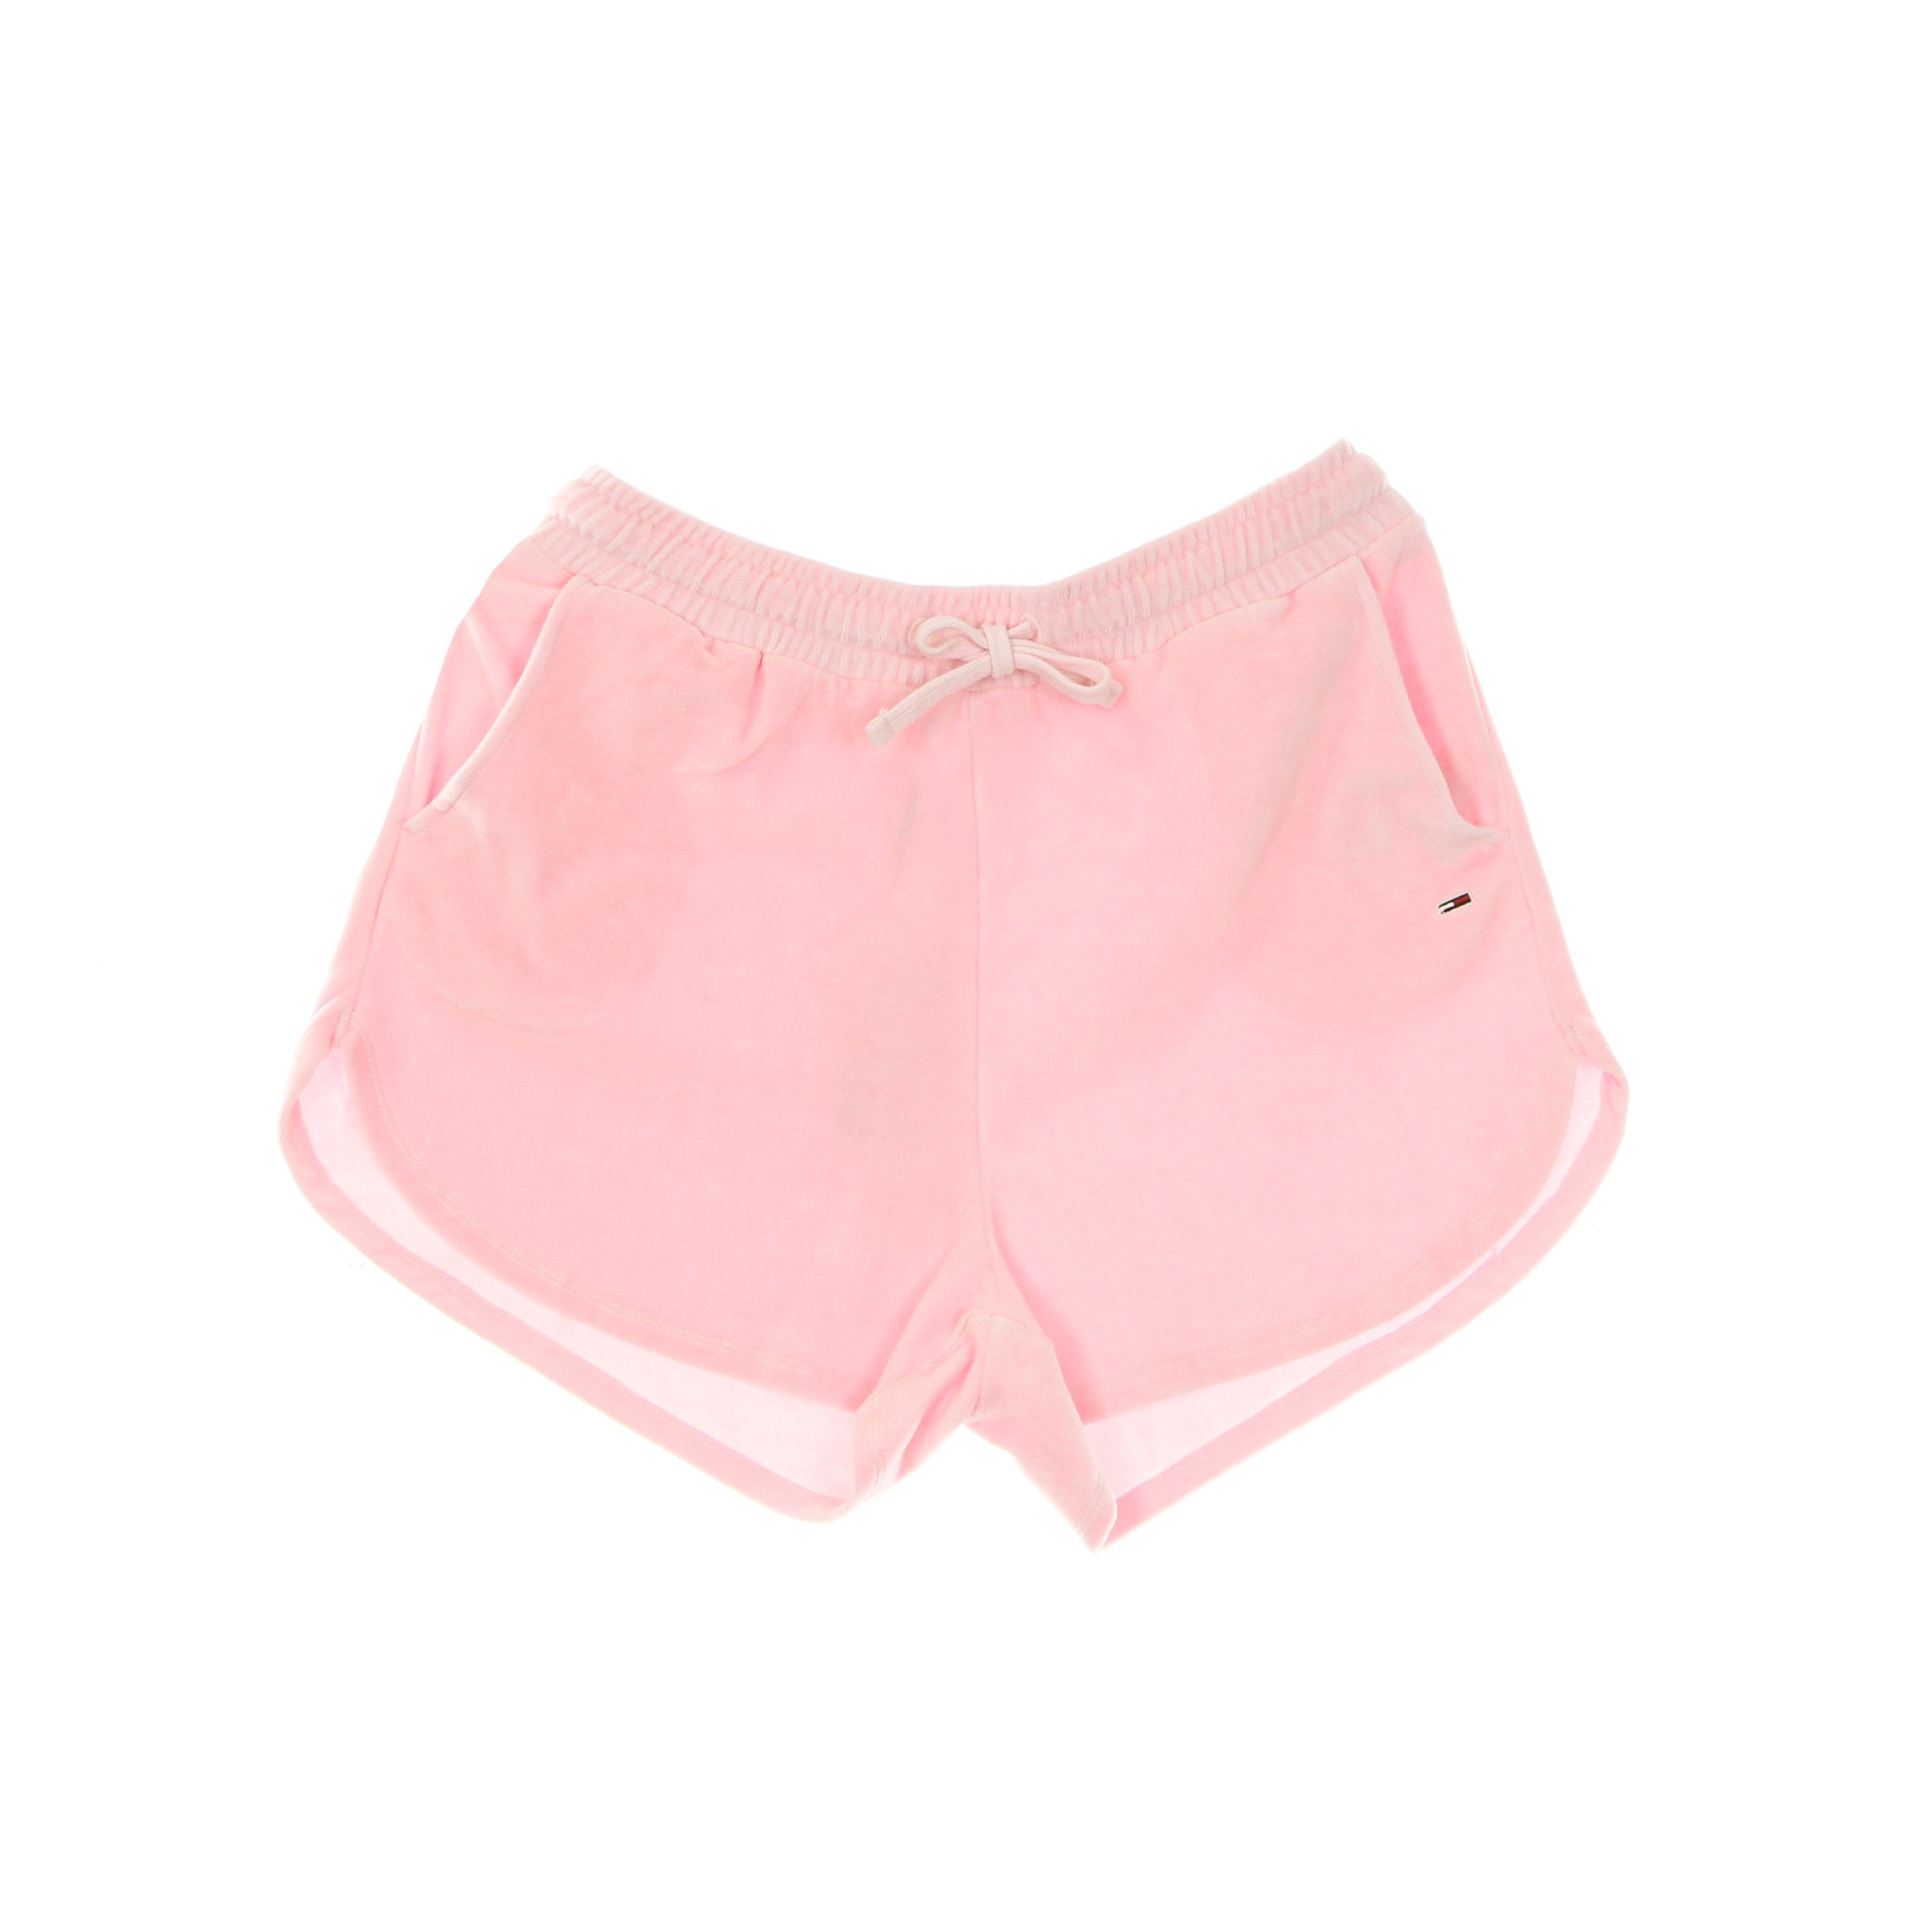 Tommy Hilfiger, Pantaloncino Donna Pastel Velour Shorts, Romantic Pink